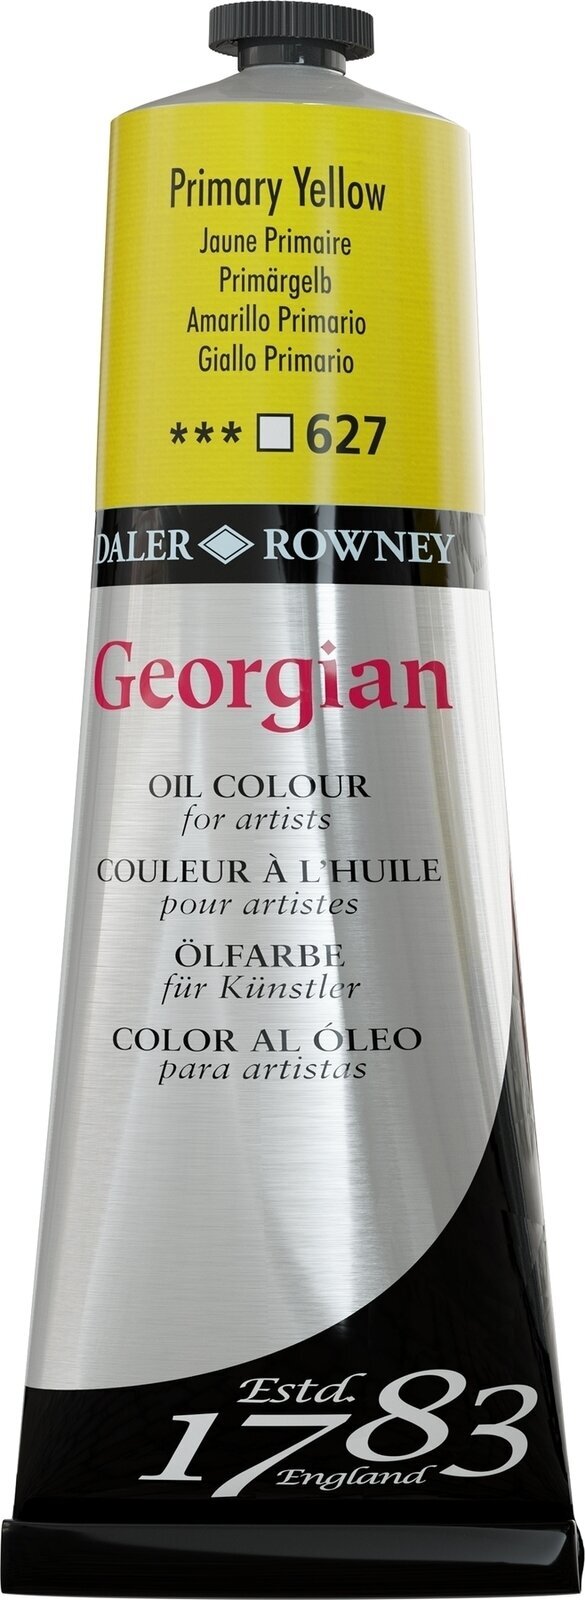 Oil colour Daler Rowney Georgian Oil Paint Primary Yellow 225 ml 1 pc